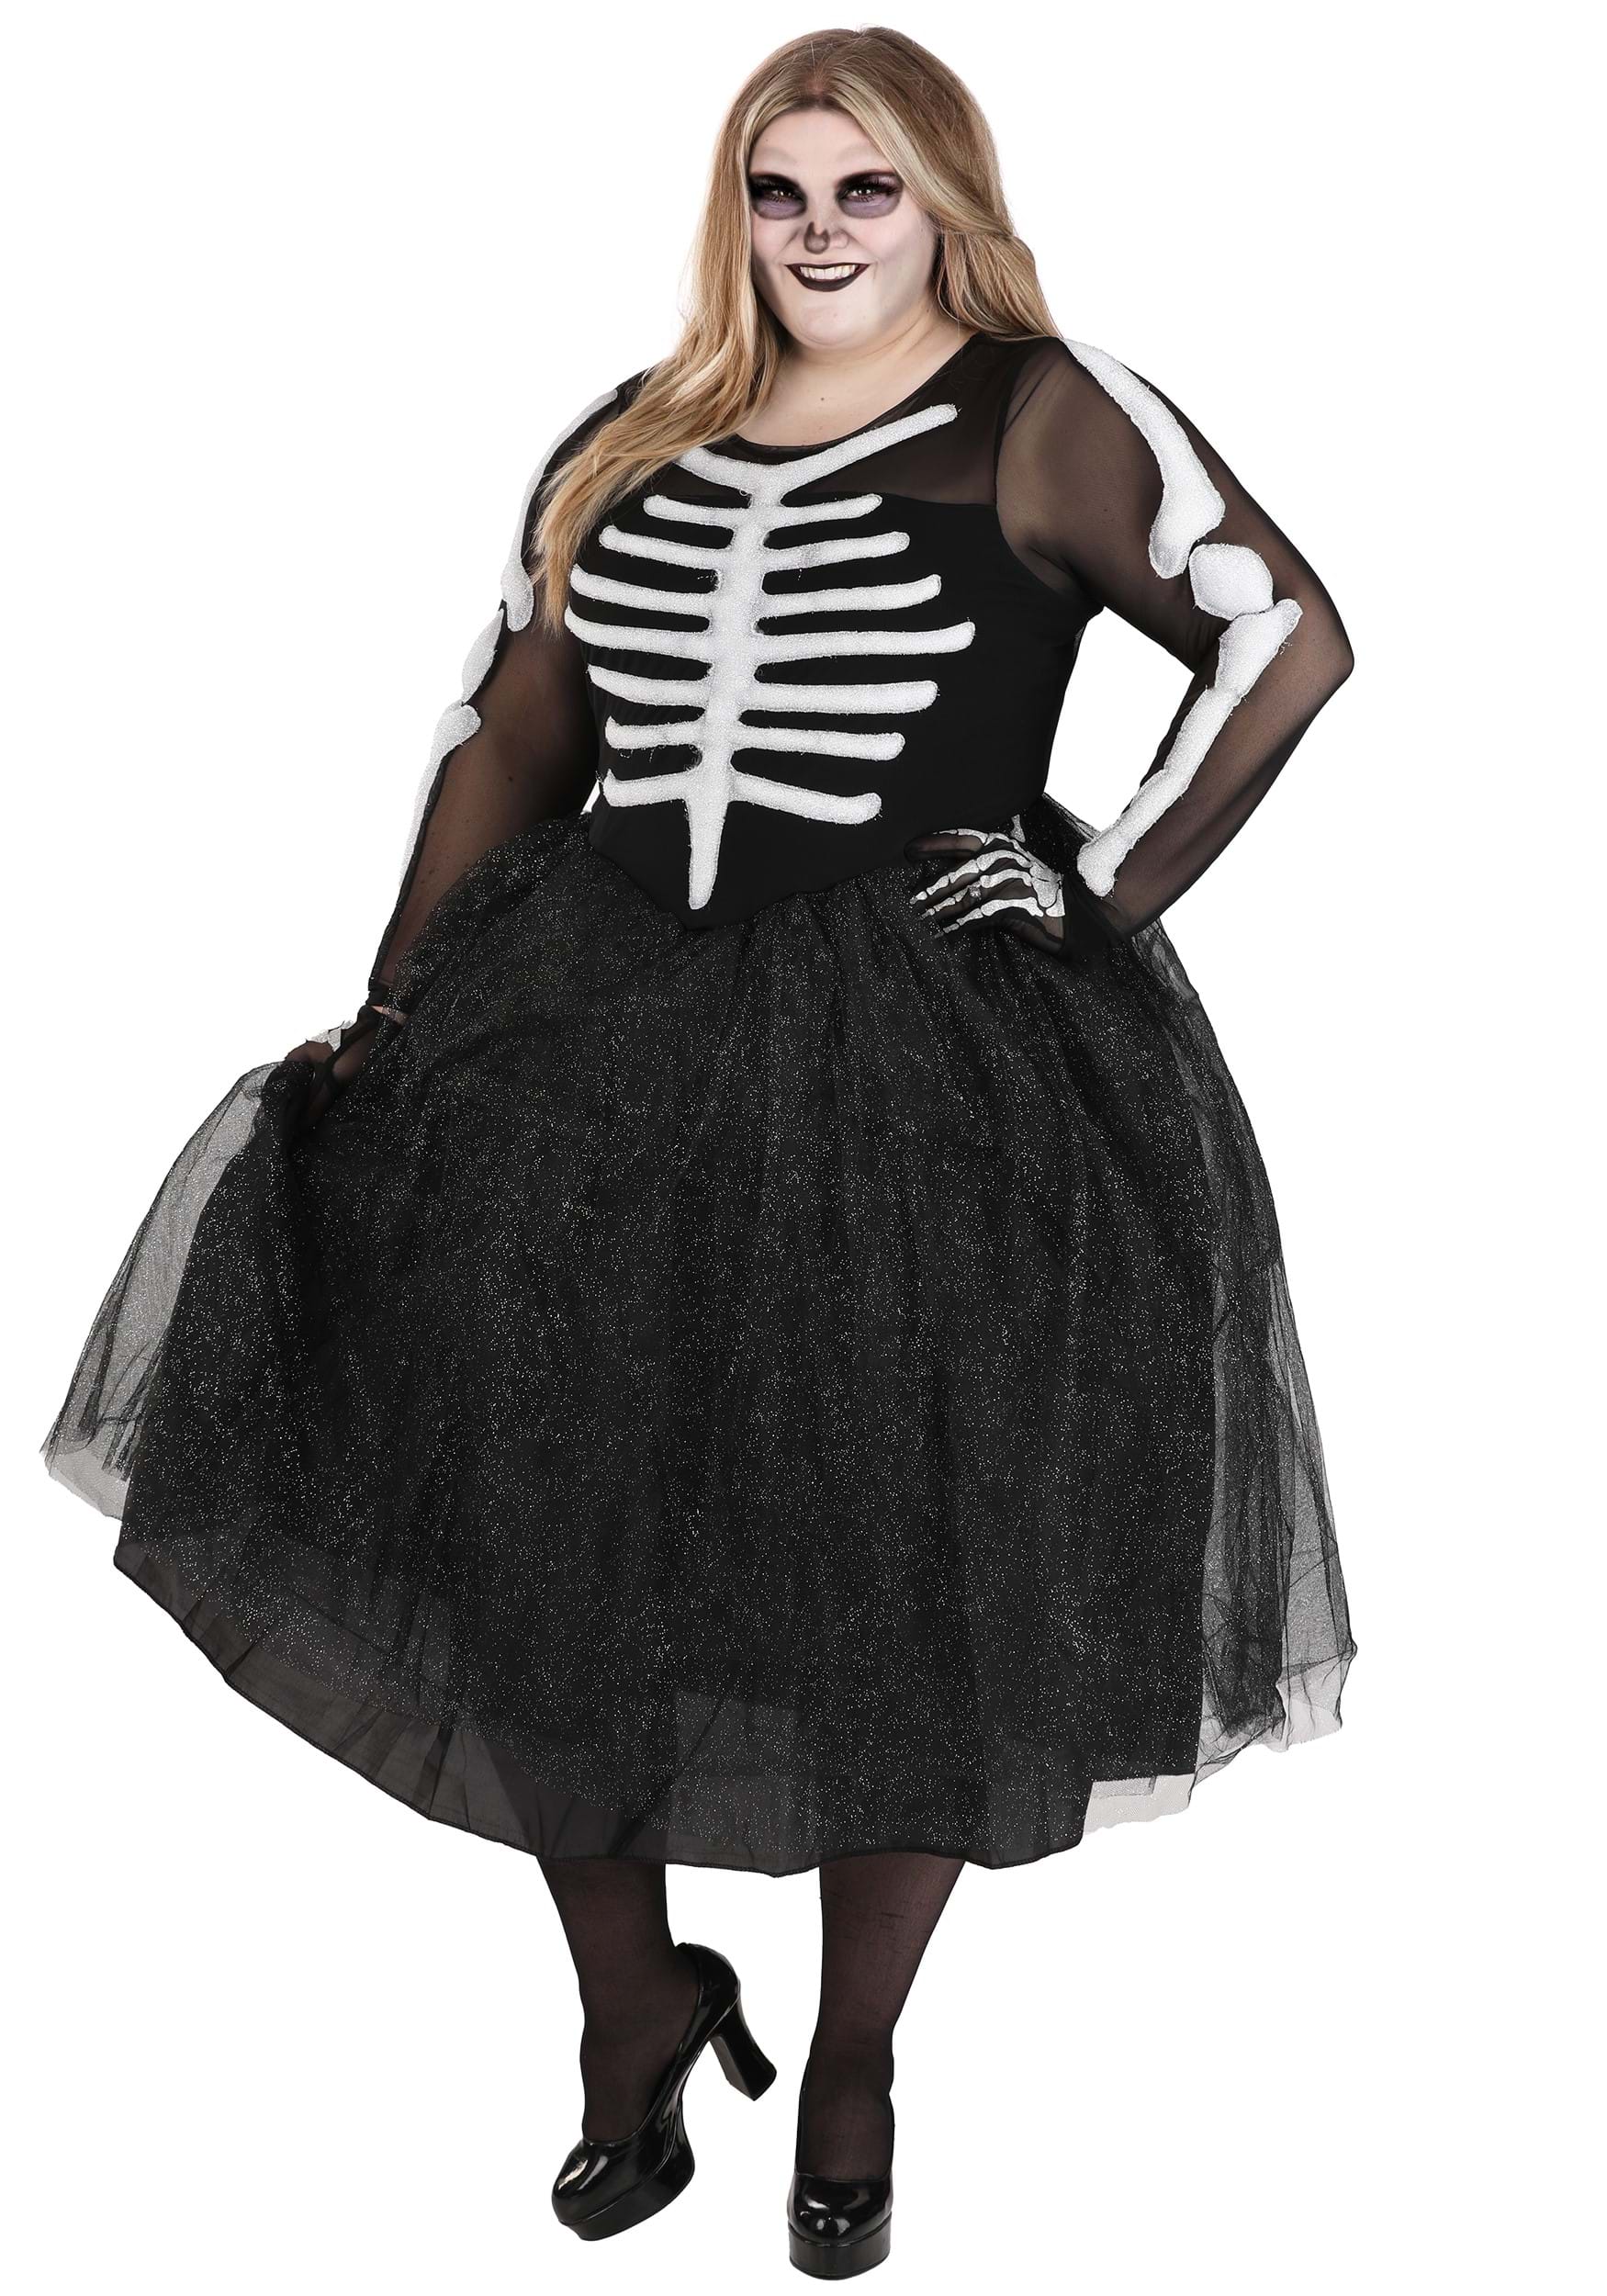 Image of Women's Skeleton Beauty Plus Size Costume ID FUN2691PL-4X